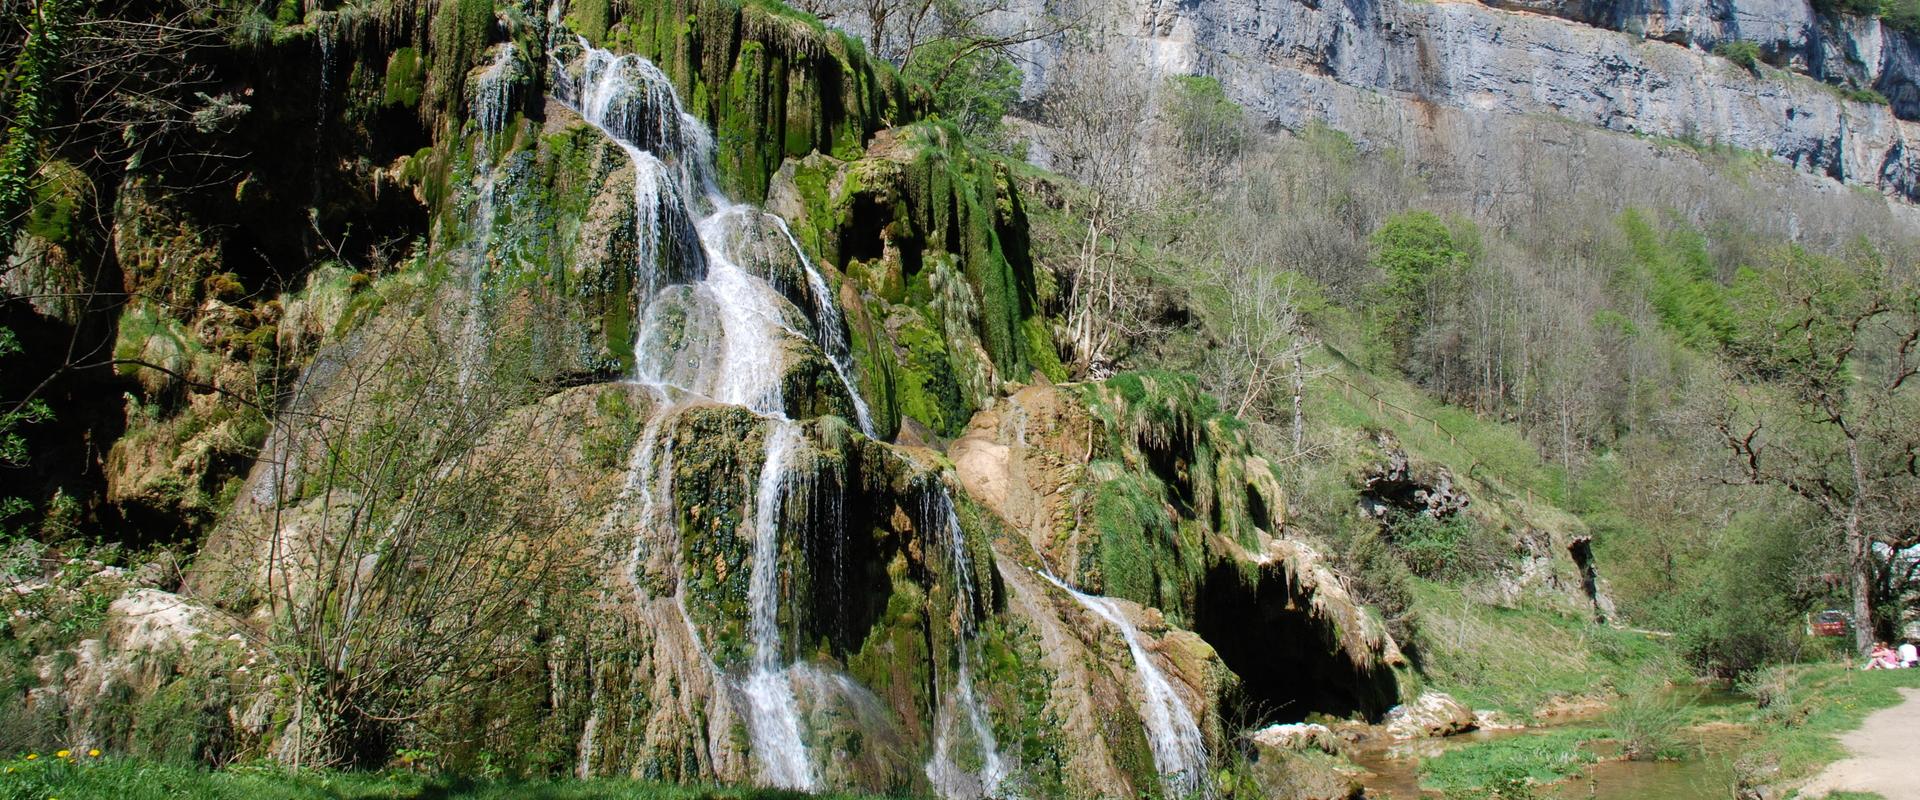 La cascade du Dard, Jura